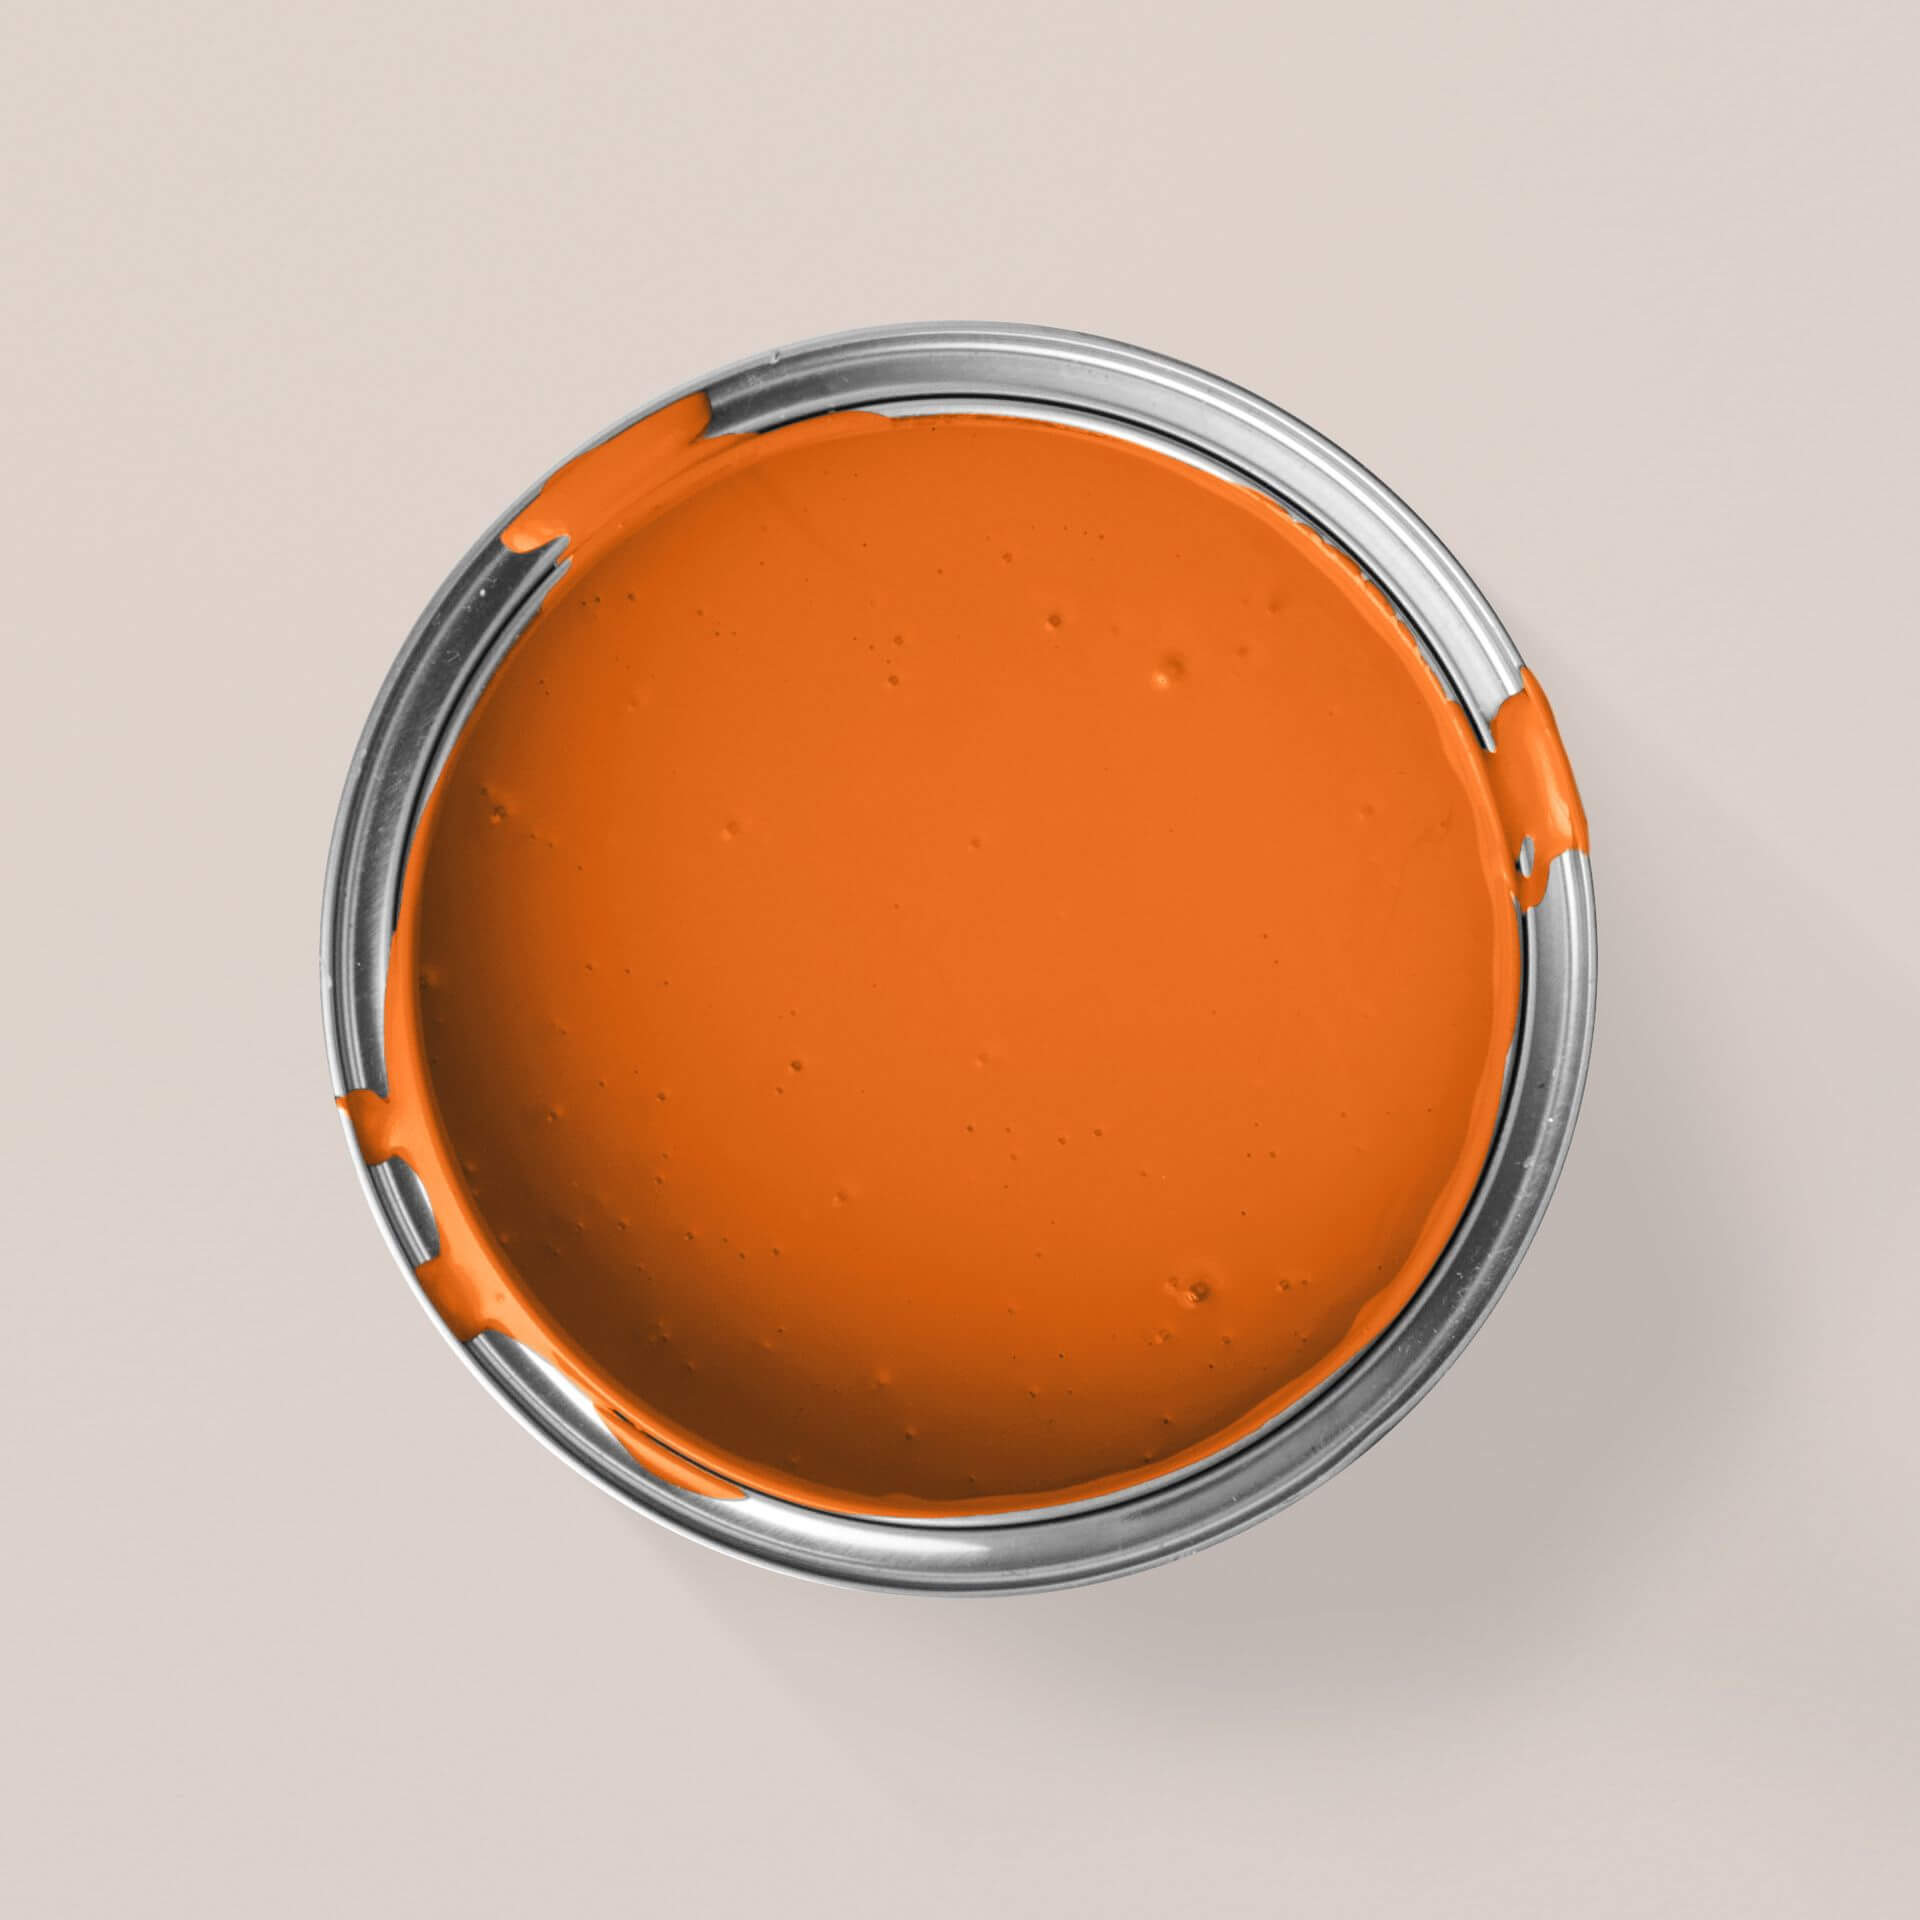 MissPompadour Orange mit Mandarine - Sanft & Matt 1L